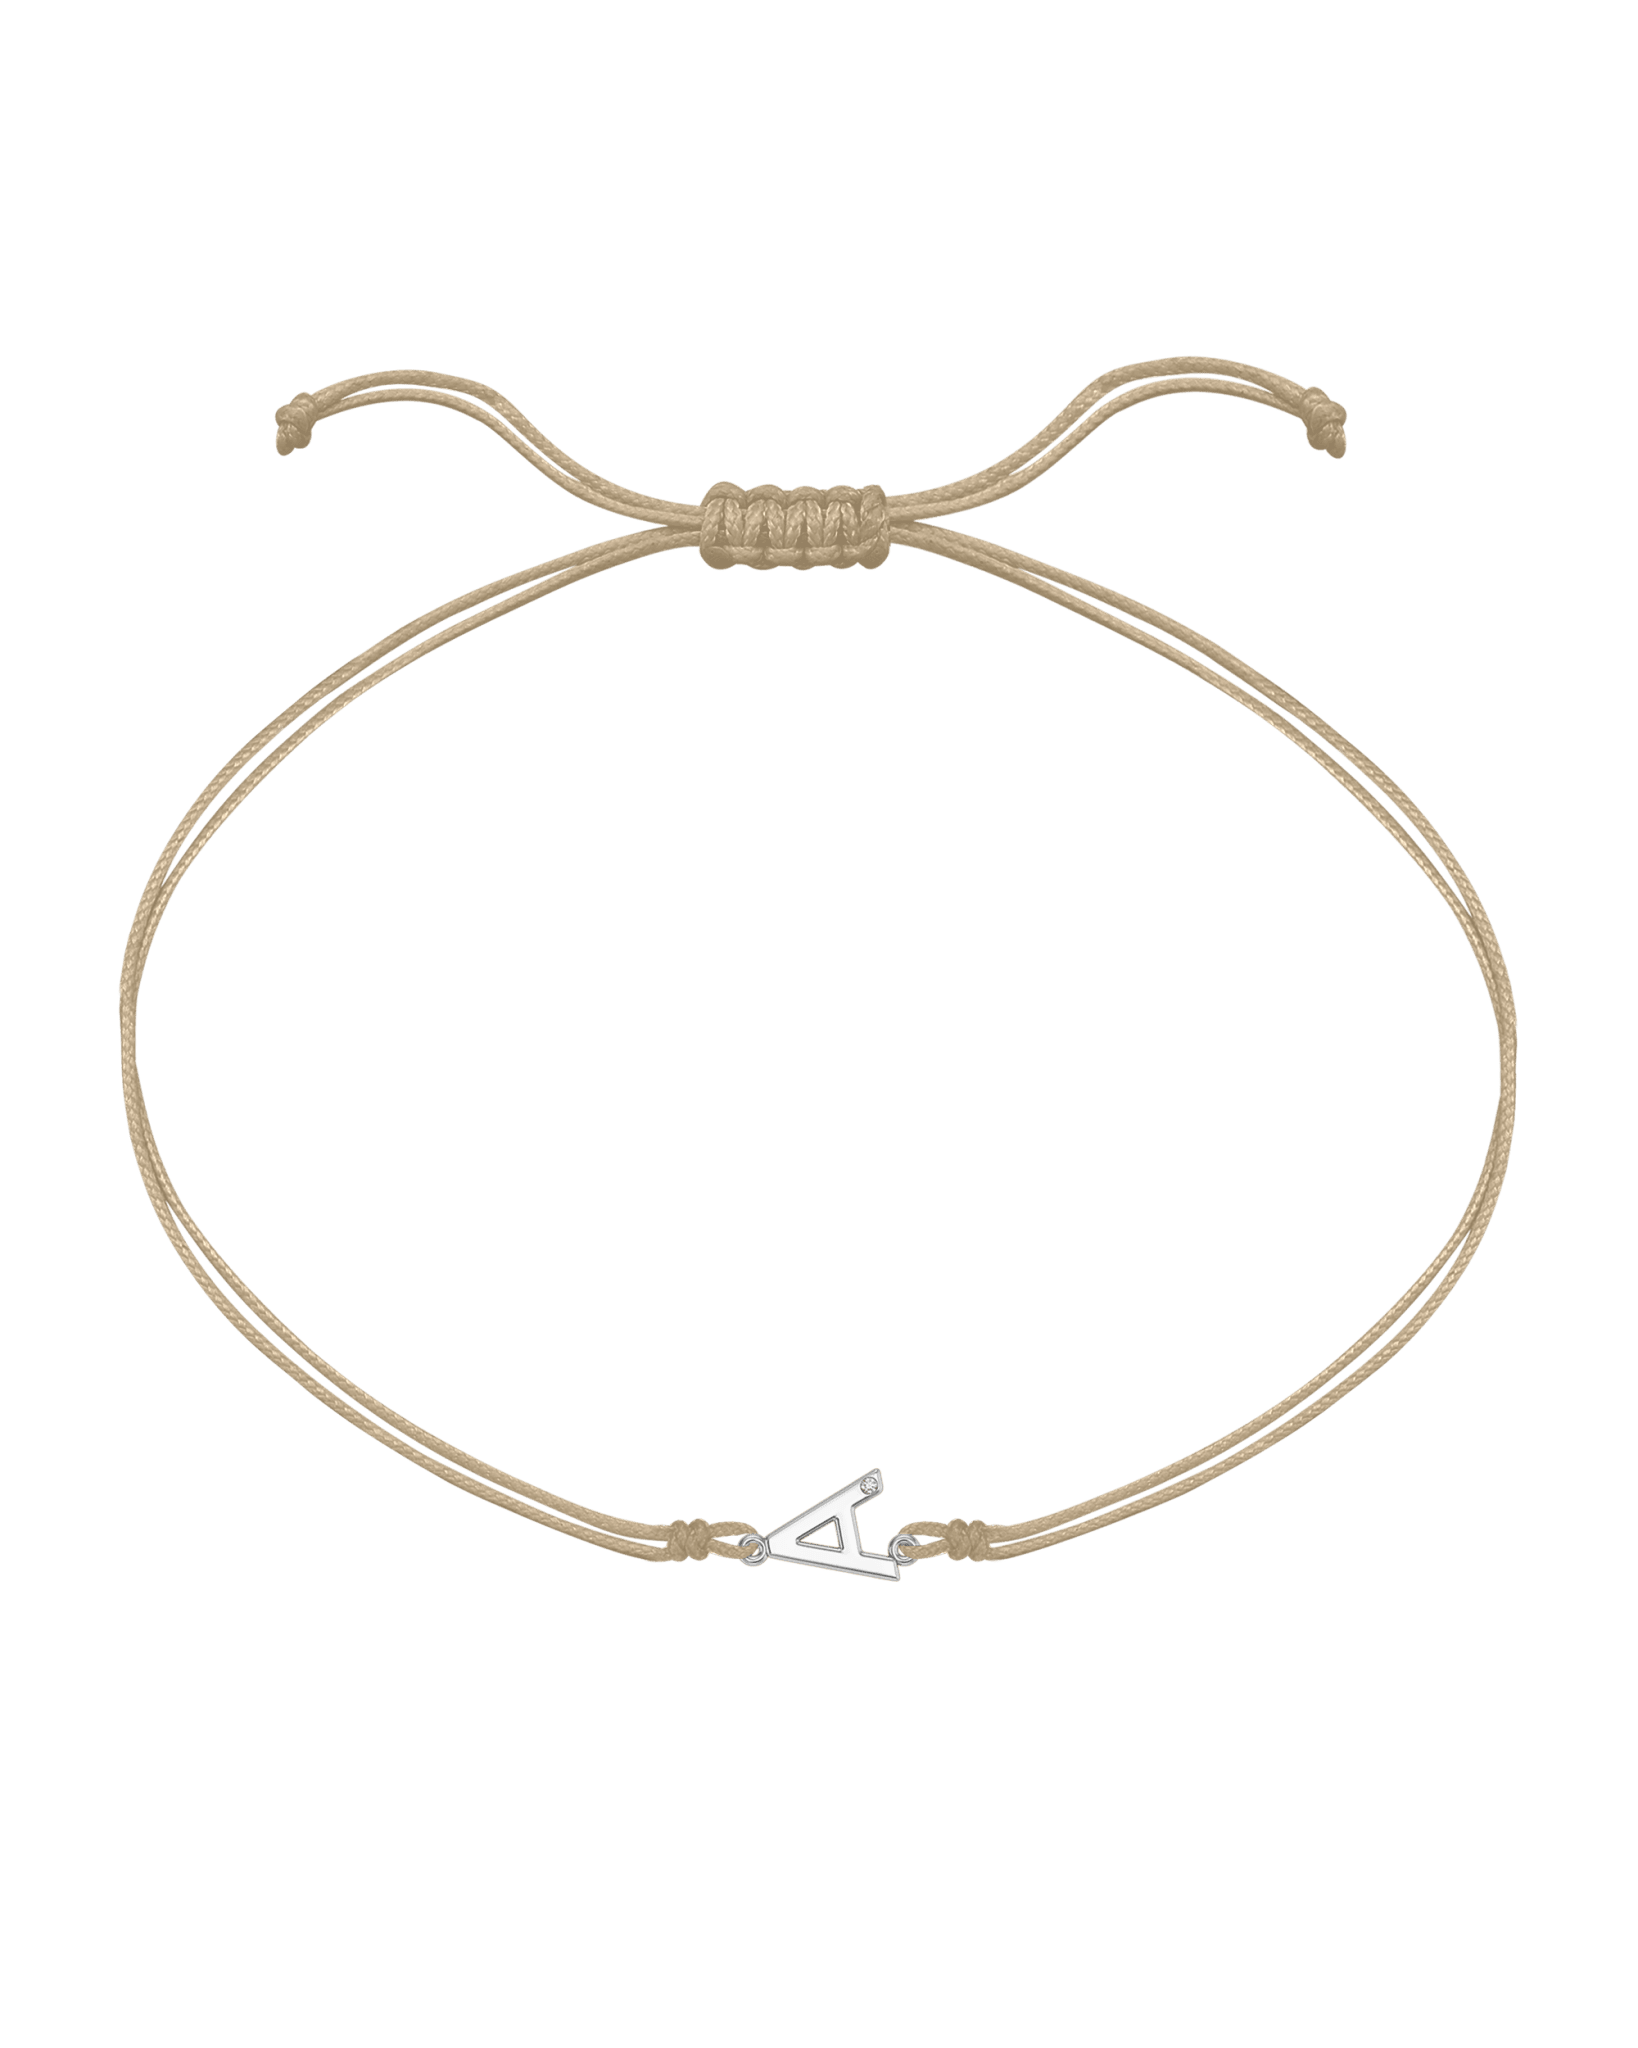 Initial String of Love - 14K White Gold Bracelets 14K Solid Gold Sand 